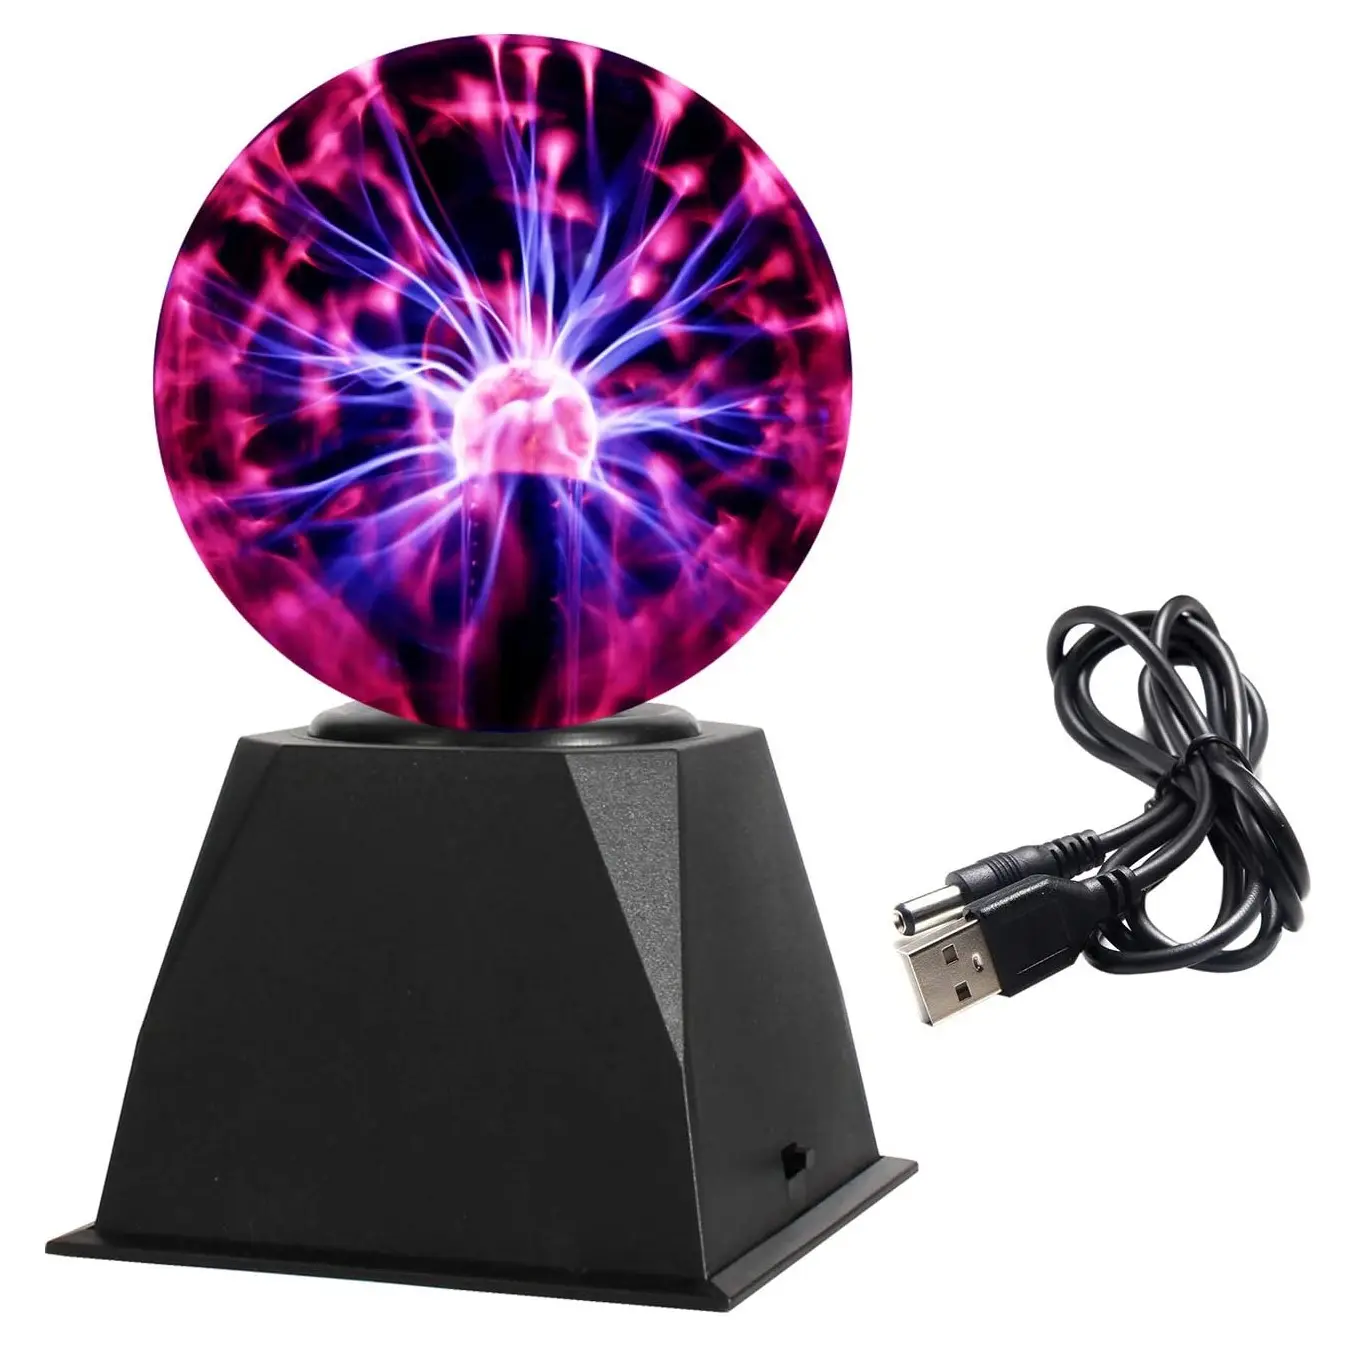 5 Inch Magic Plasma Ball Lamp - Touch & Sound Sensitive Interactive USB Powered Nebula Sphere Globe, Science Educational Gift